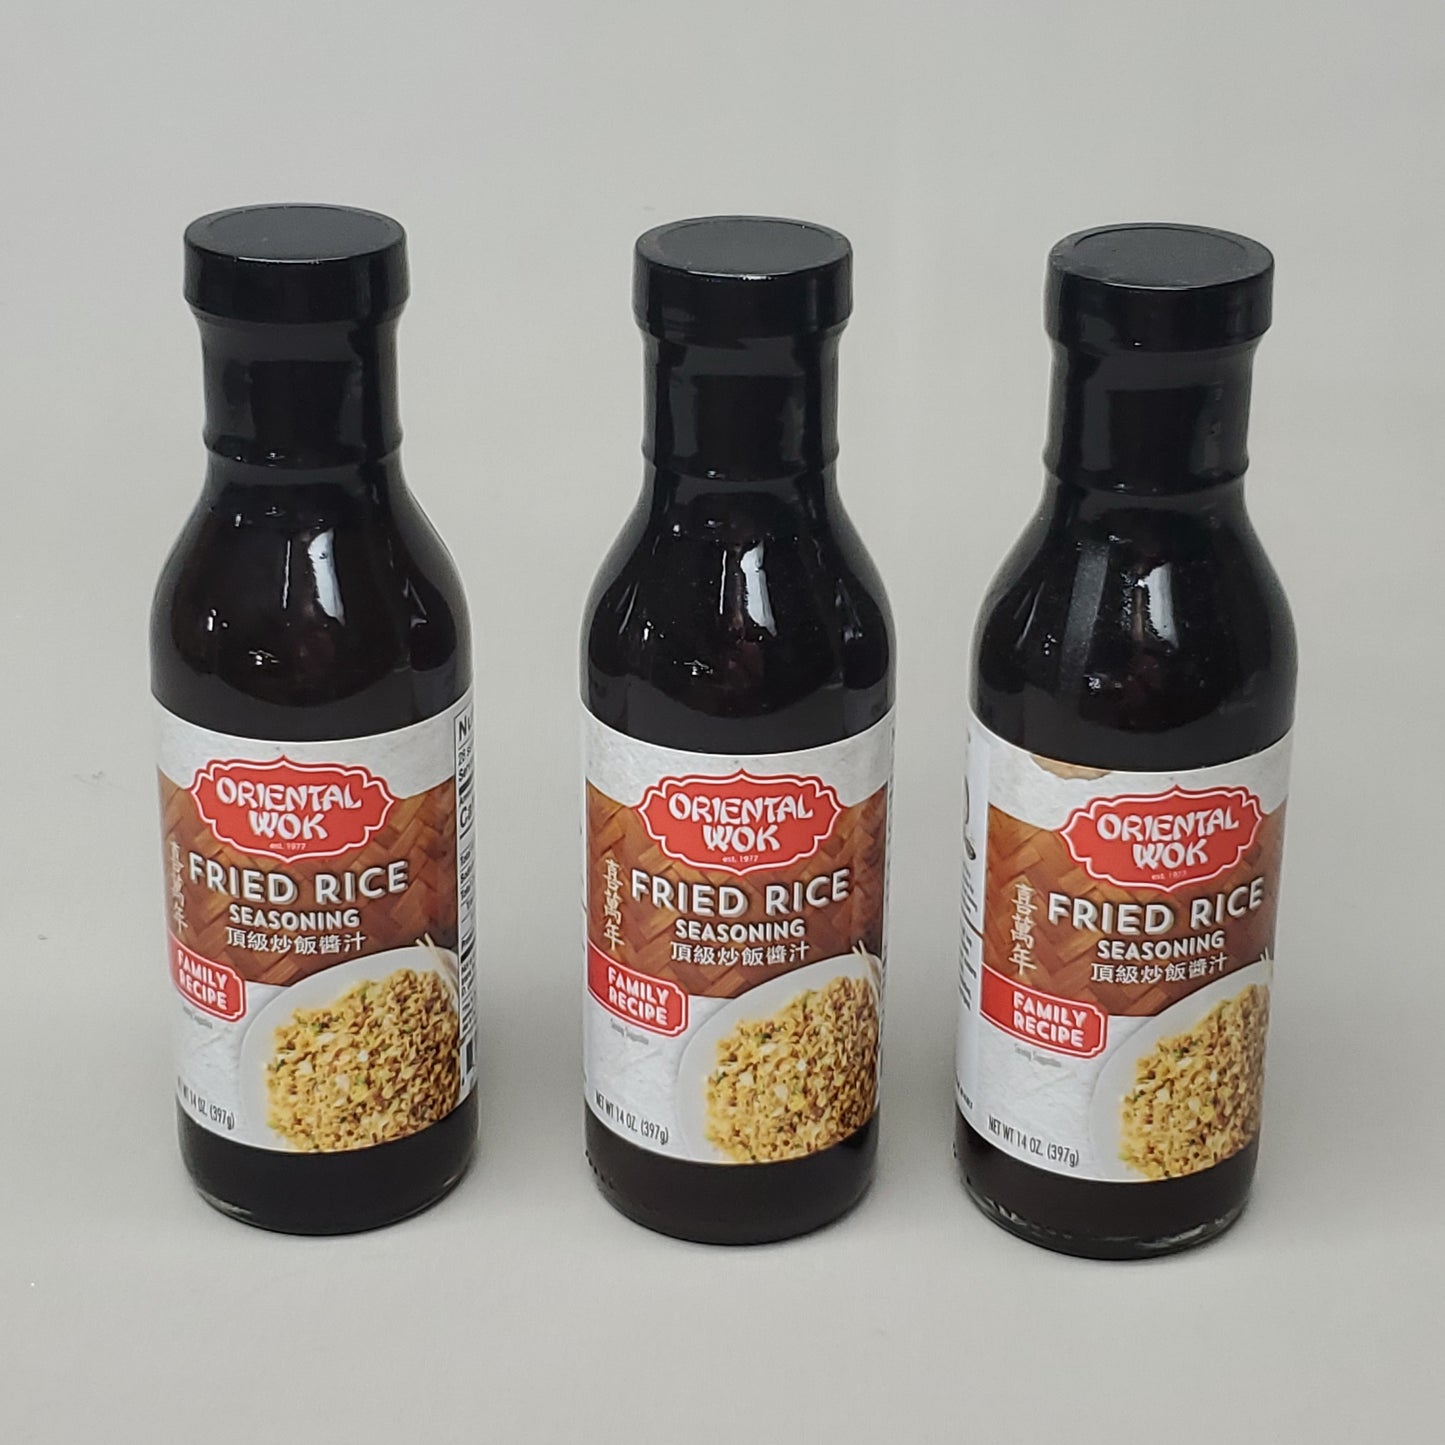 ORIENTAL WOK 6 Pack of Perfect Fried Rice Seasoning 14 oz Glass Bottle (09/24)